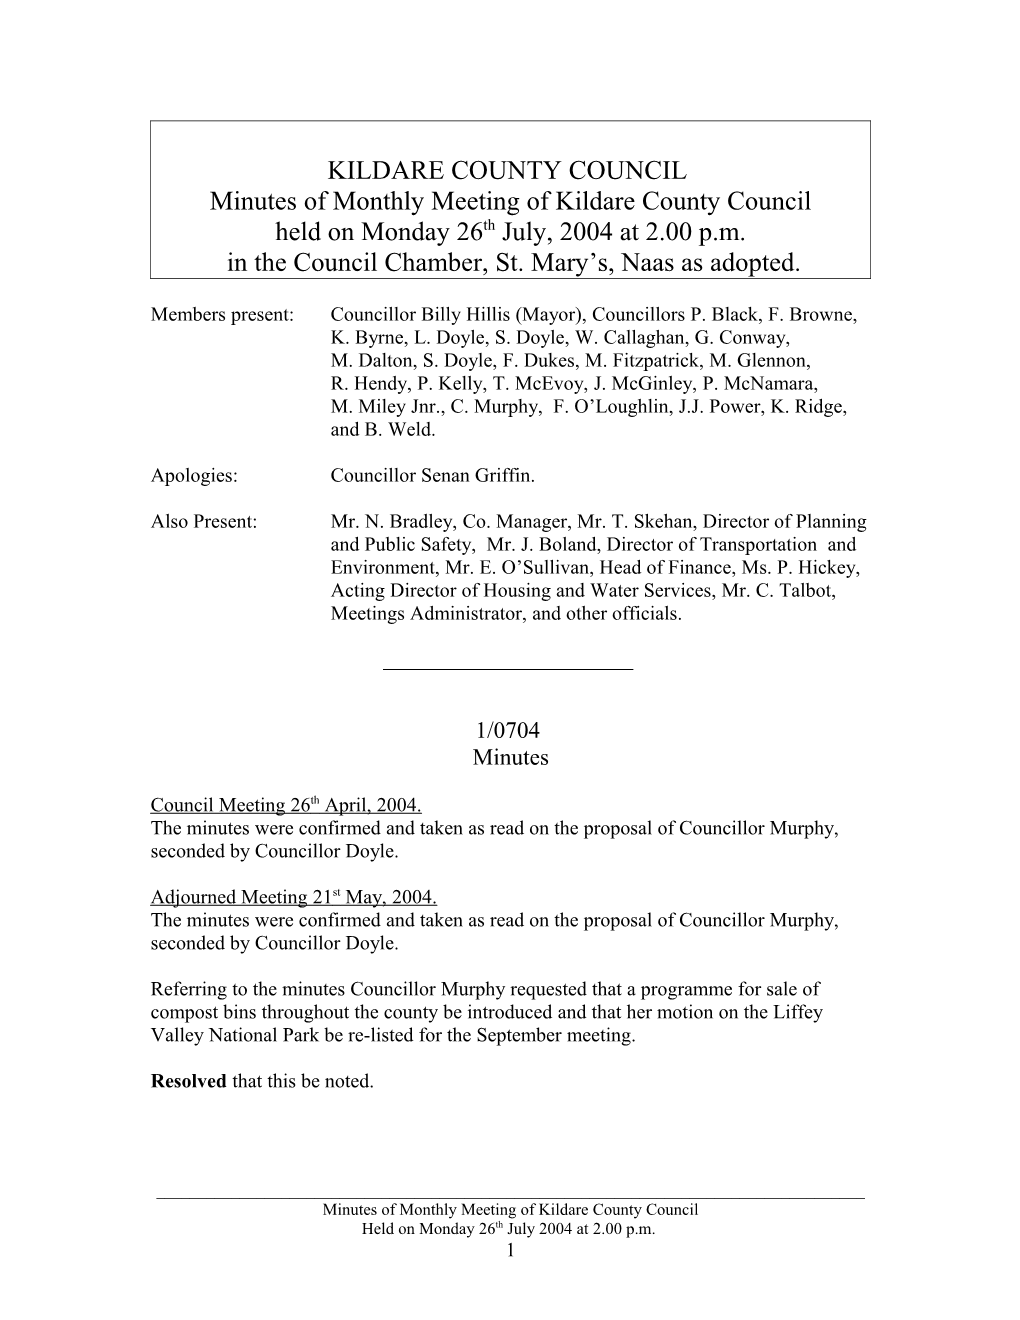 Minutes - Kildare County Council - 27/09/04